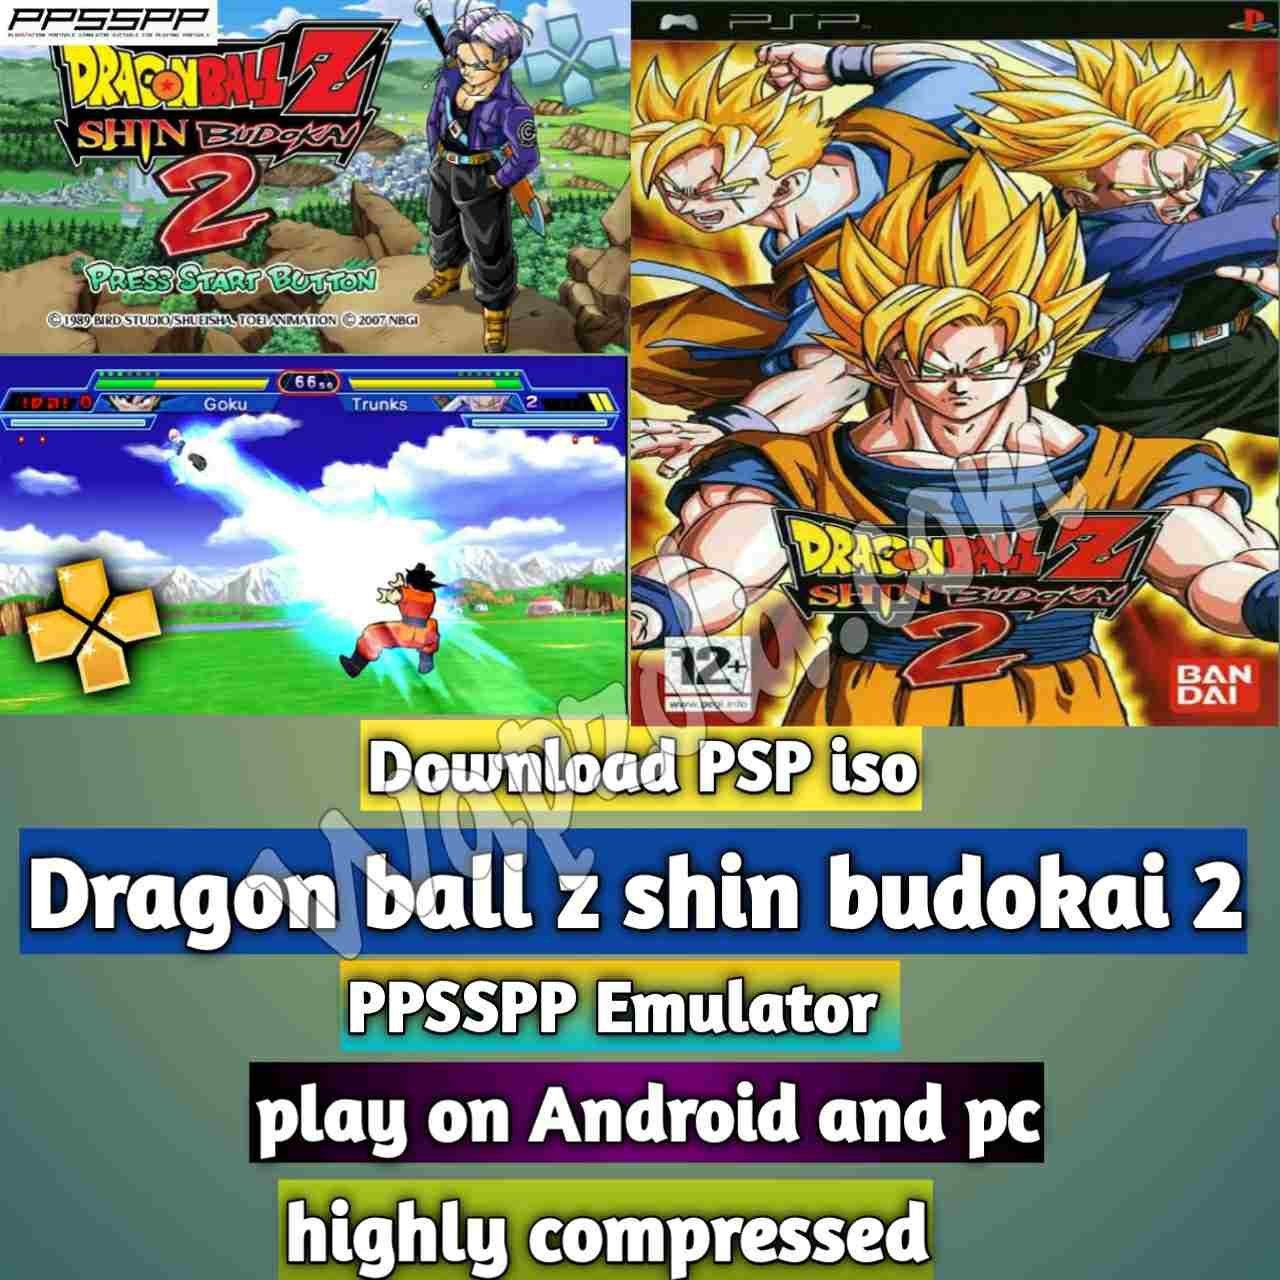 [Download] Dragon ball z shin budokai 2 iso ppsspp emulator – PSP APK Iso ROM altamente comprimido 300MB 1